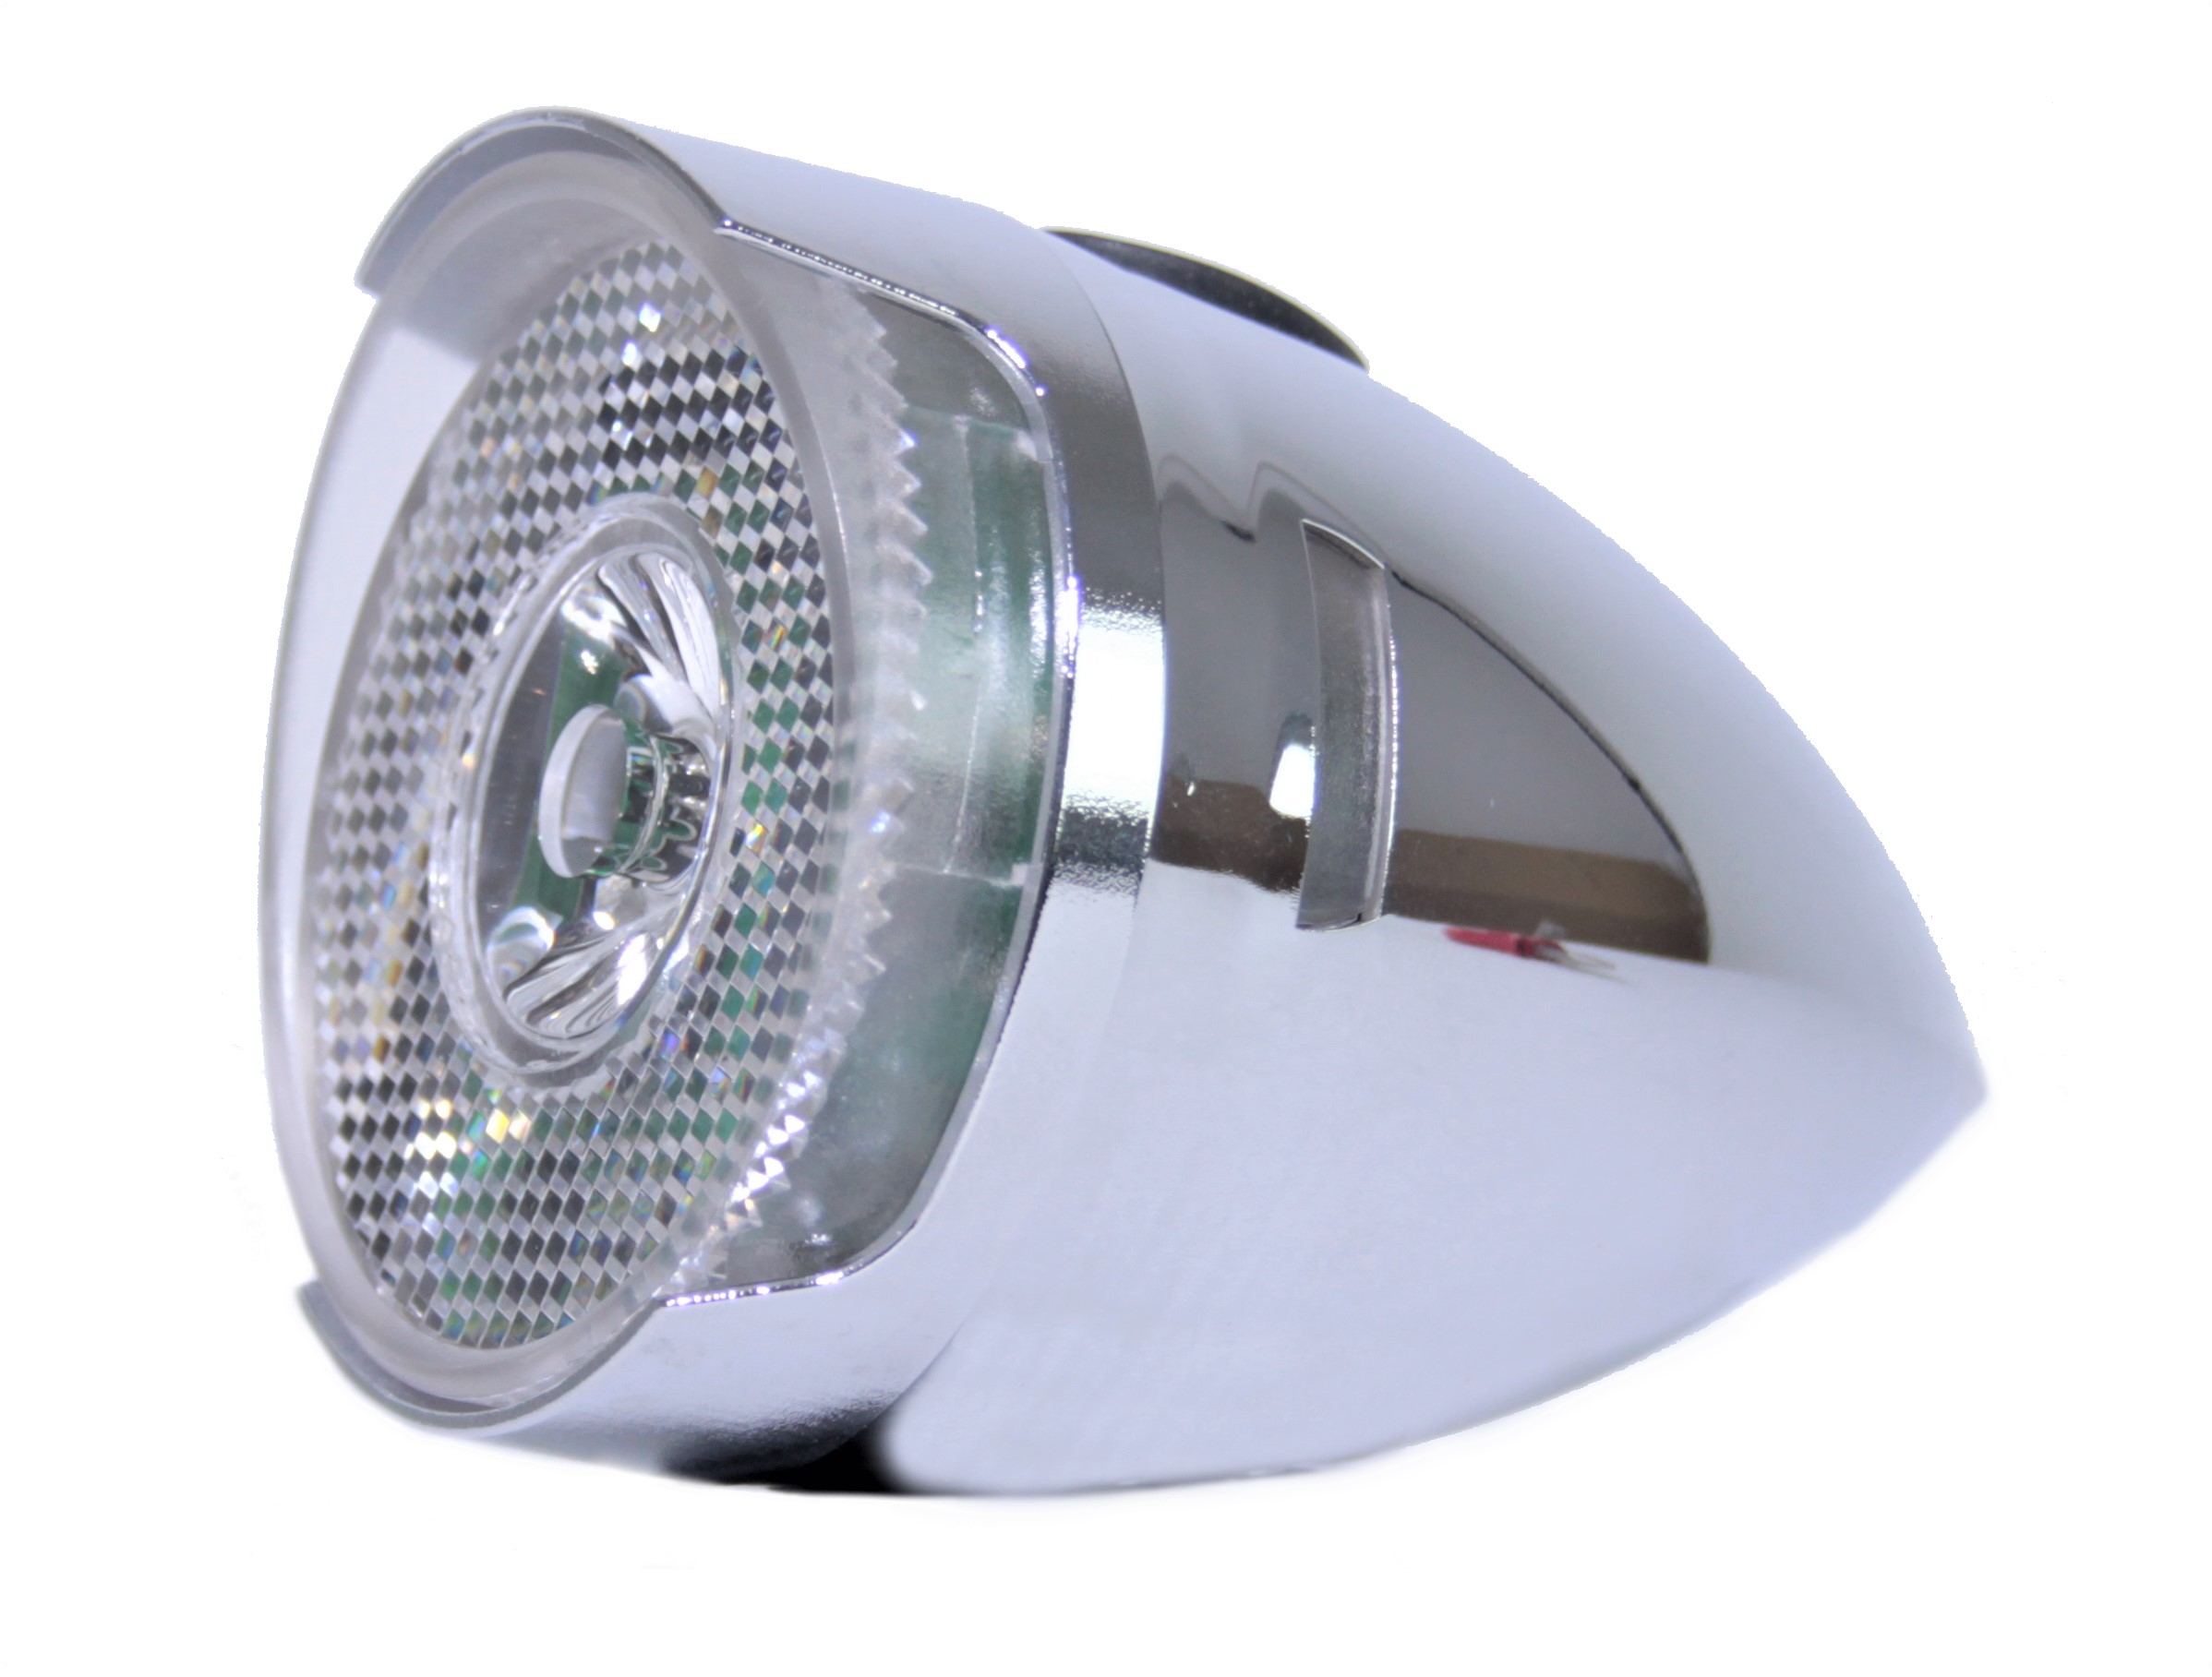 CC Retro LED Frontlampe Batterie 65 mm chrom mit Sonnenschute